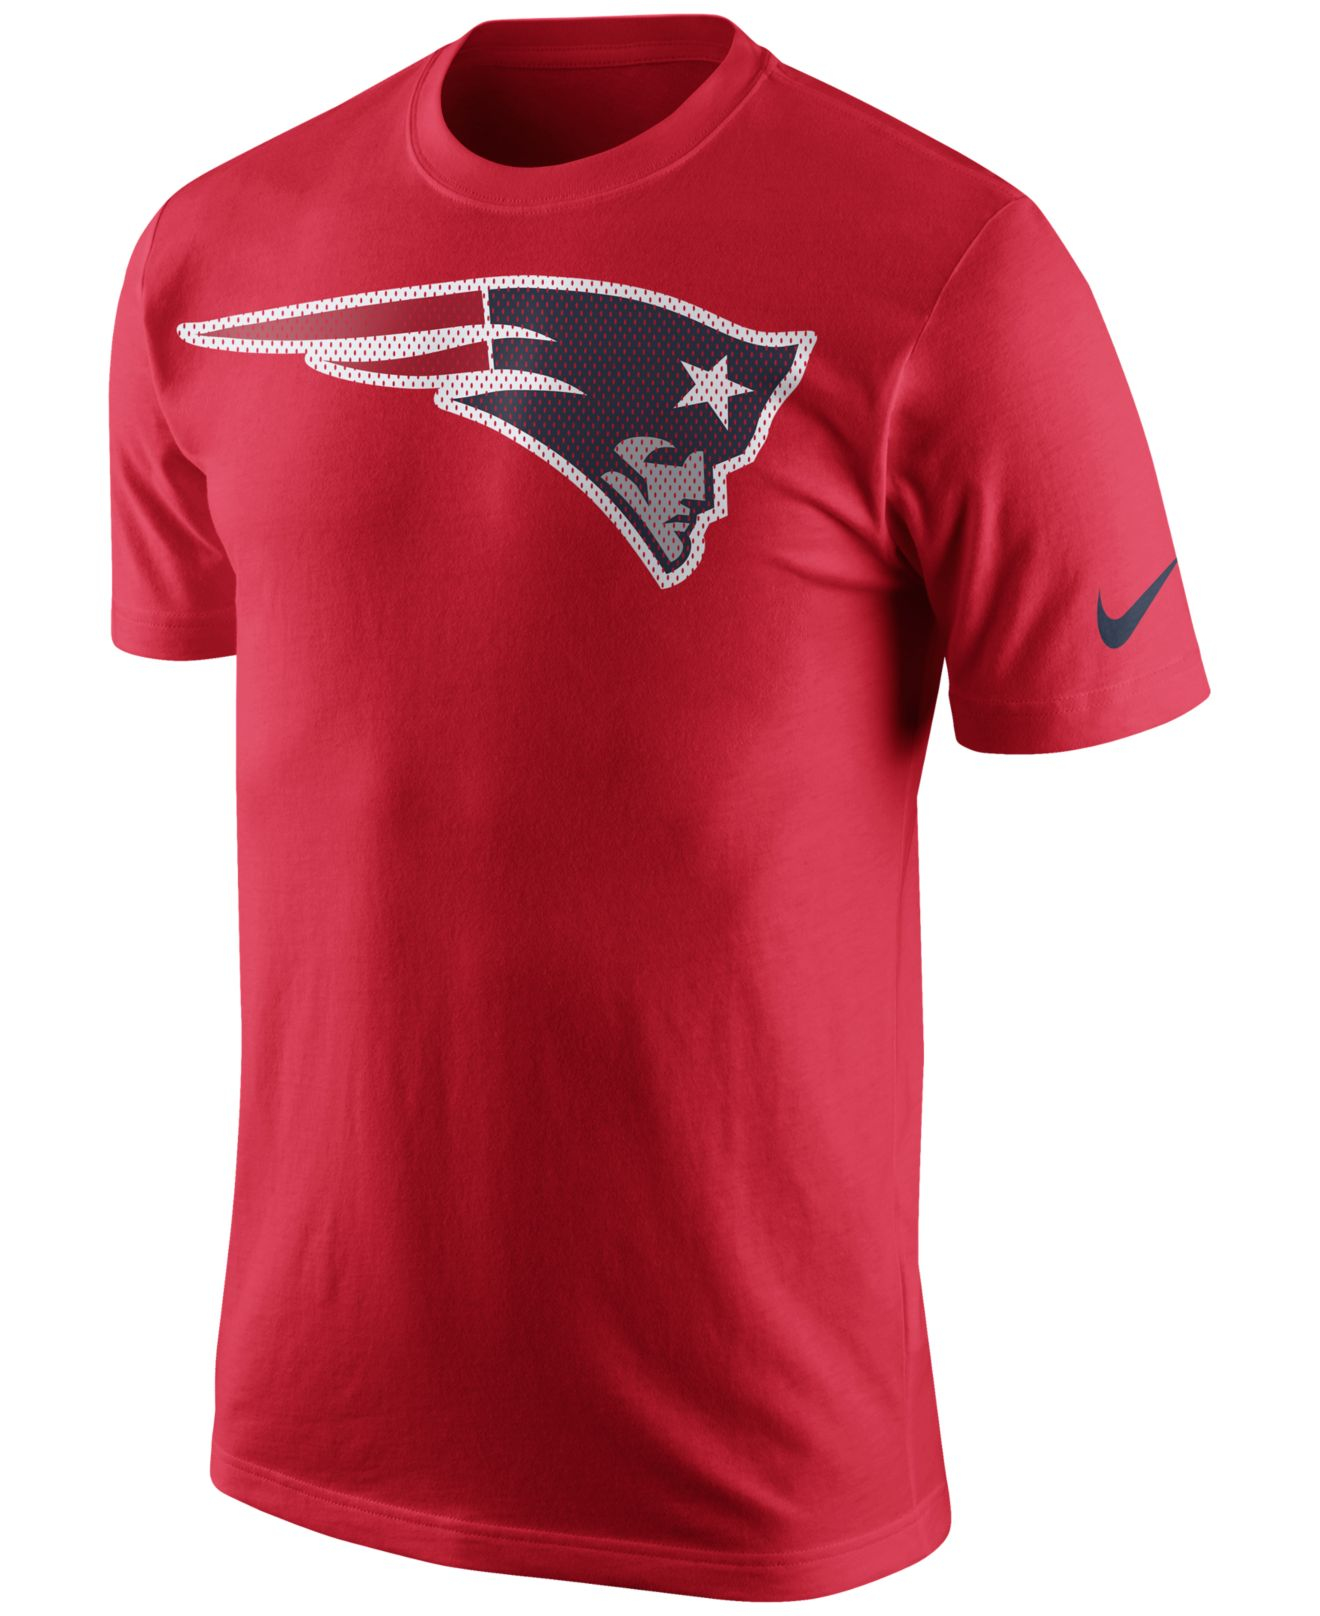 Lyst - Nike Men's New England Patriots Mesh Logo T-shirt in Red for Men